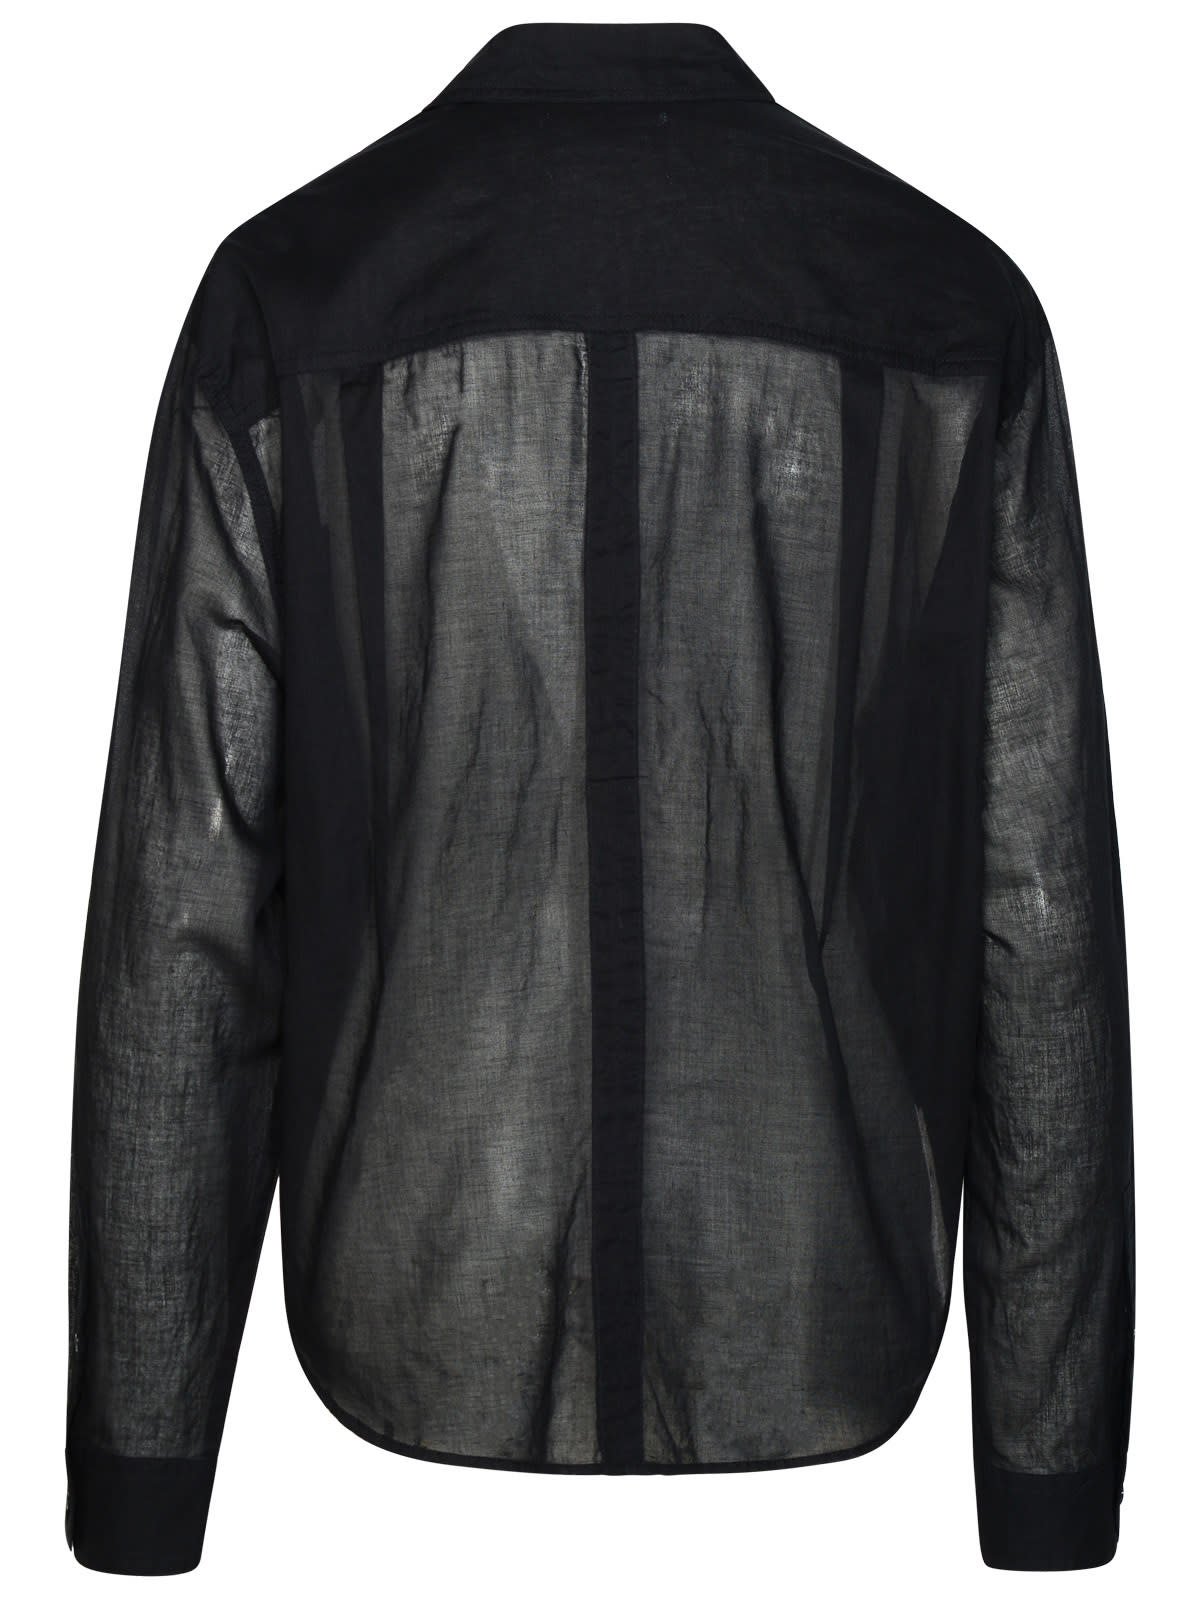 Shop Marant Etoile Black Cotton Shirt